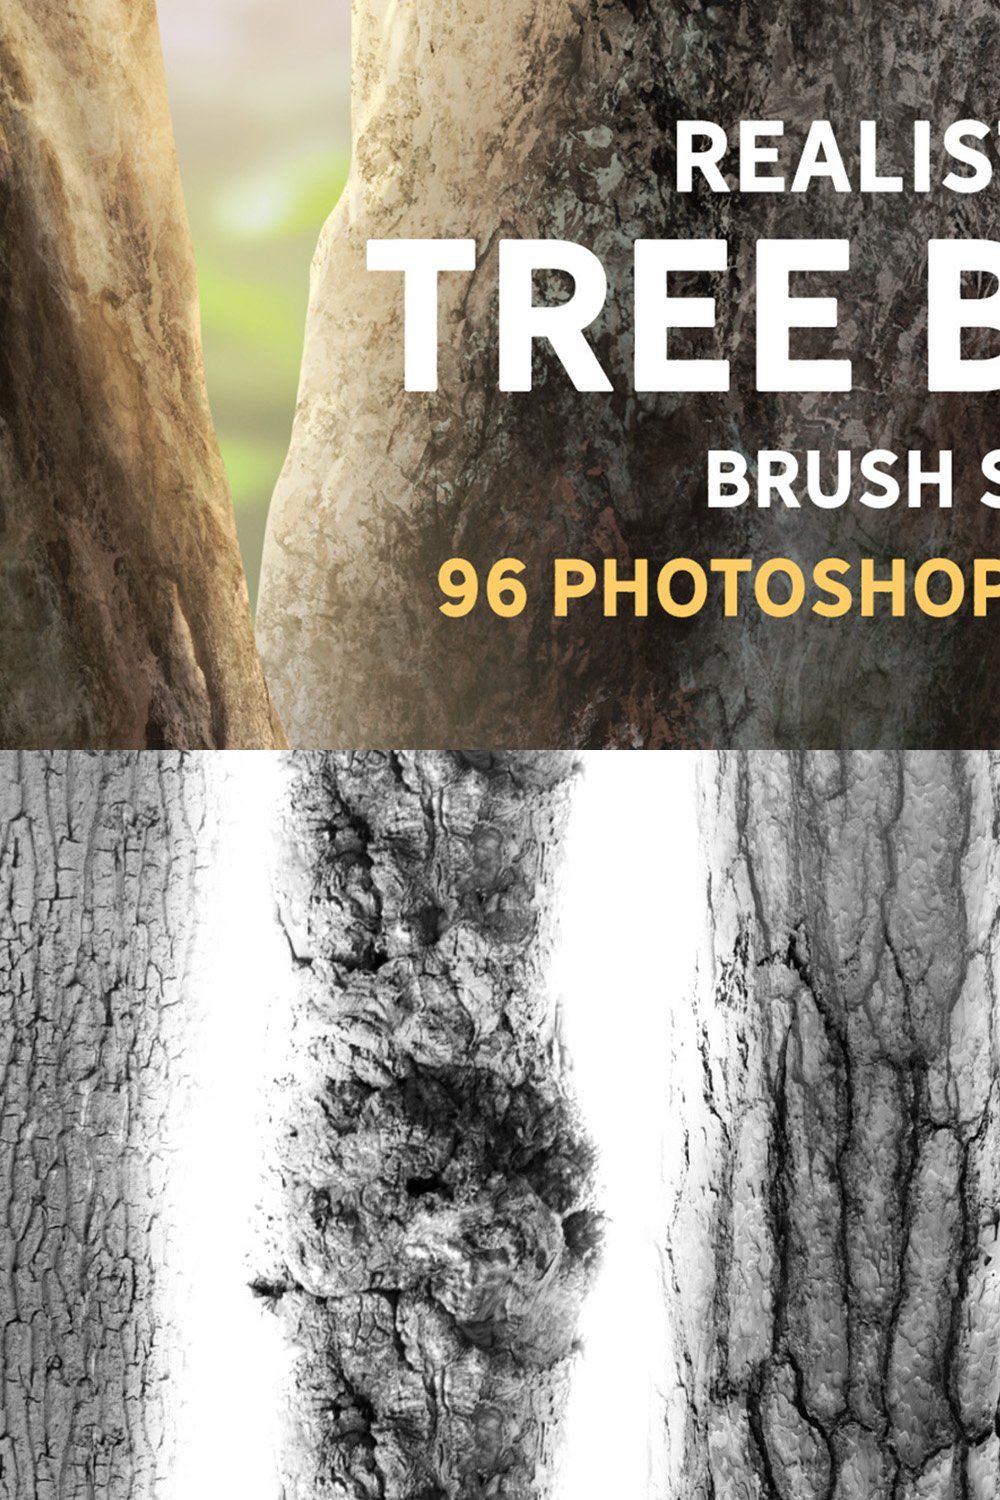 Realistic Tree bark brush set pinterest preview image.